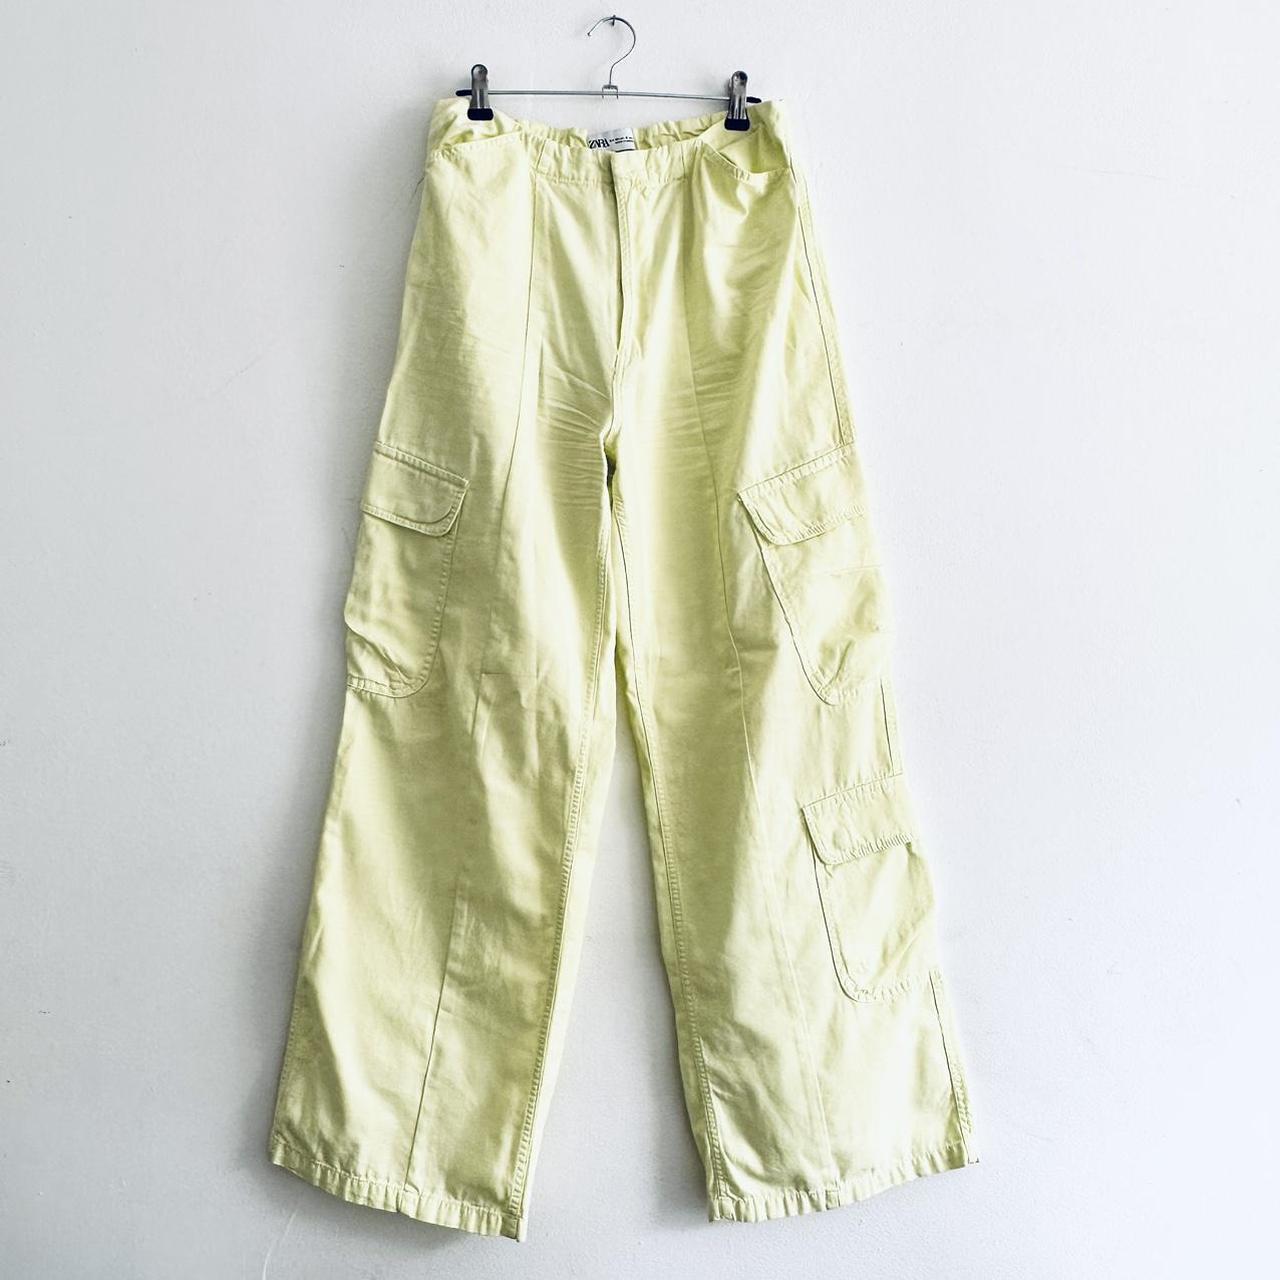 Zara lemon yellow / light lime cargo pants with - Depop